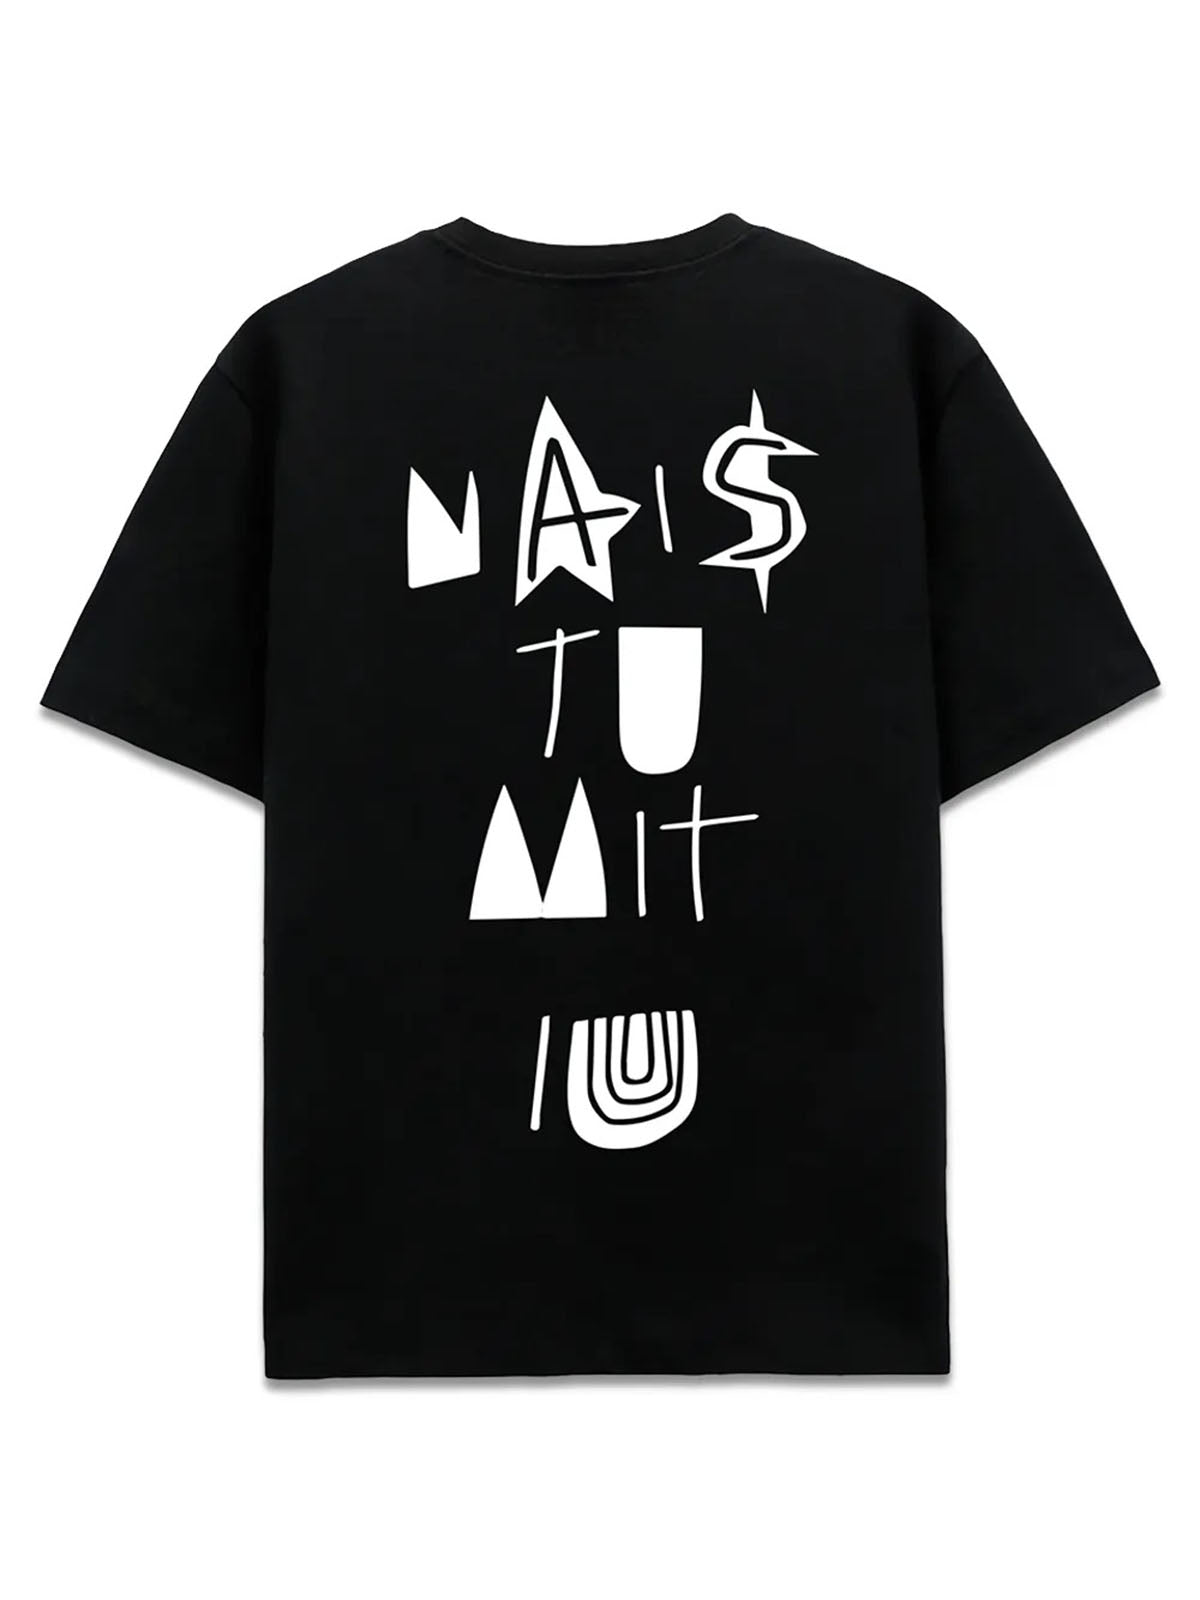 T-shirt Uomo Nais - Cuore Lore Prod X Nais Tee - Nero